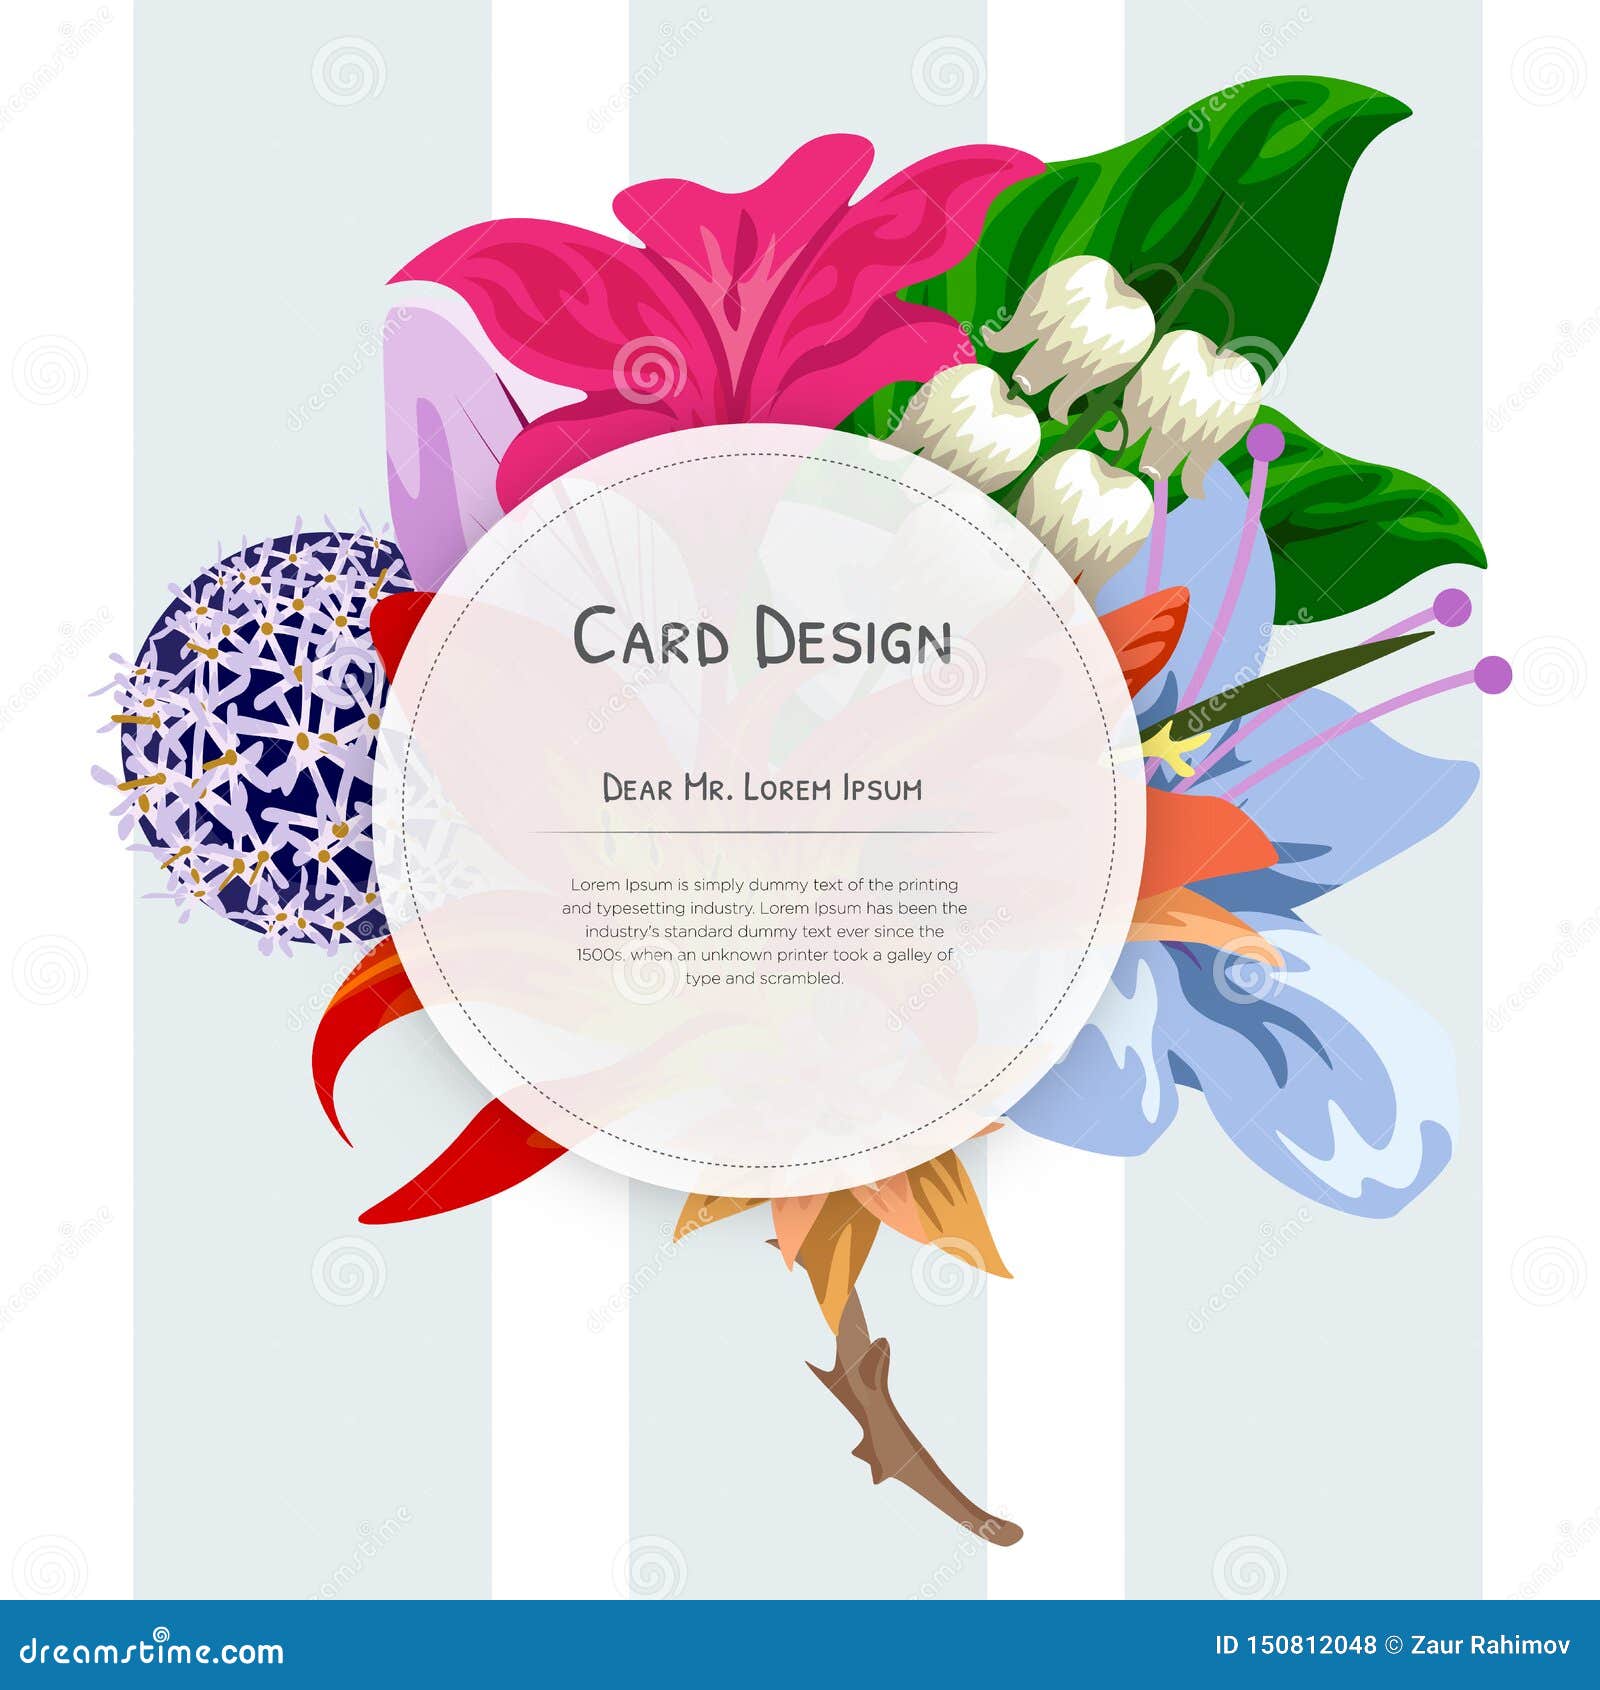 Wedding Event Invitation Card Design with Tropical Flowers, Invite With Event Invitation Card Template